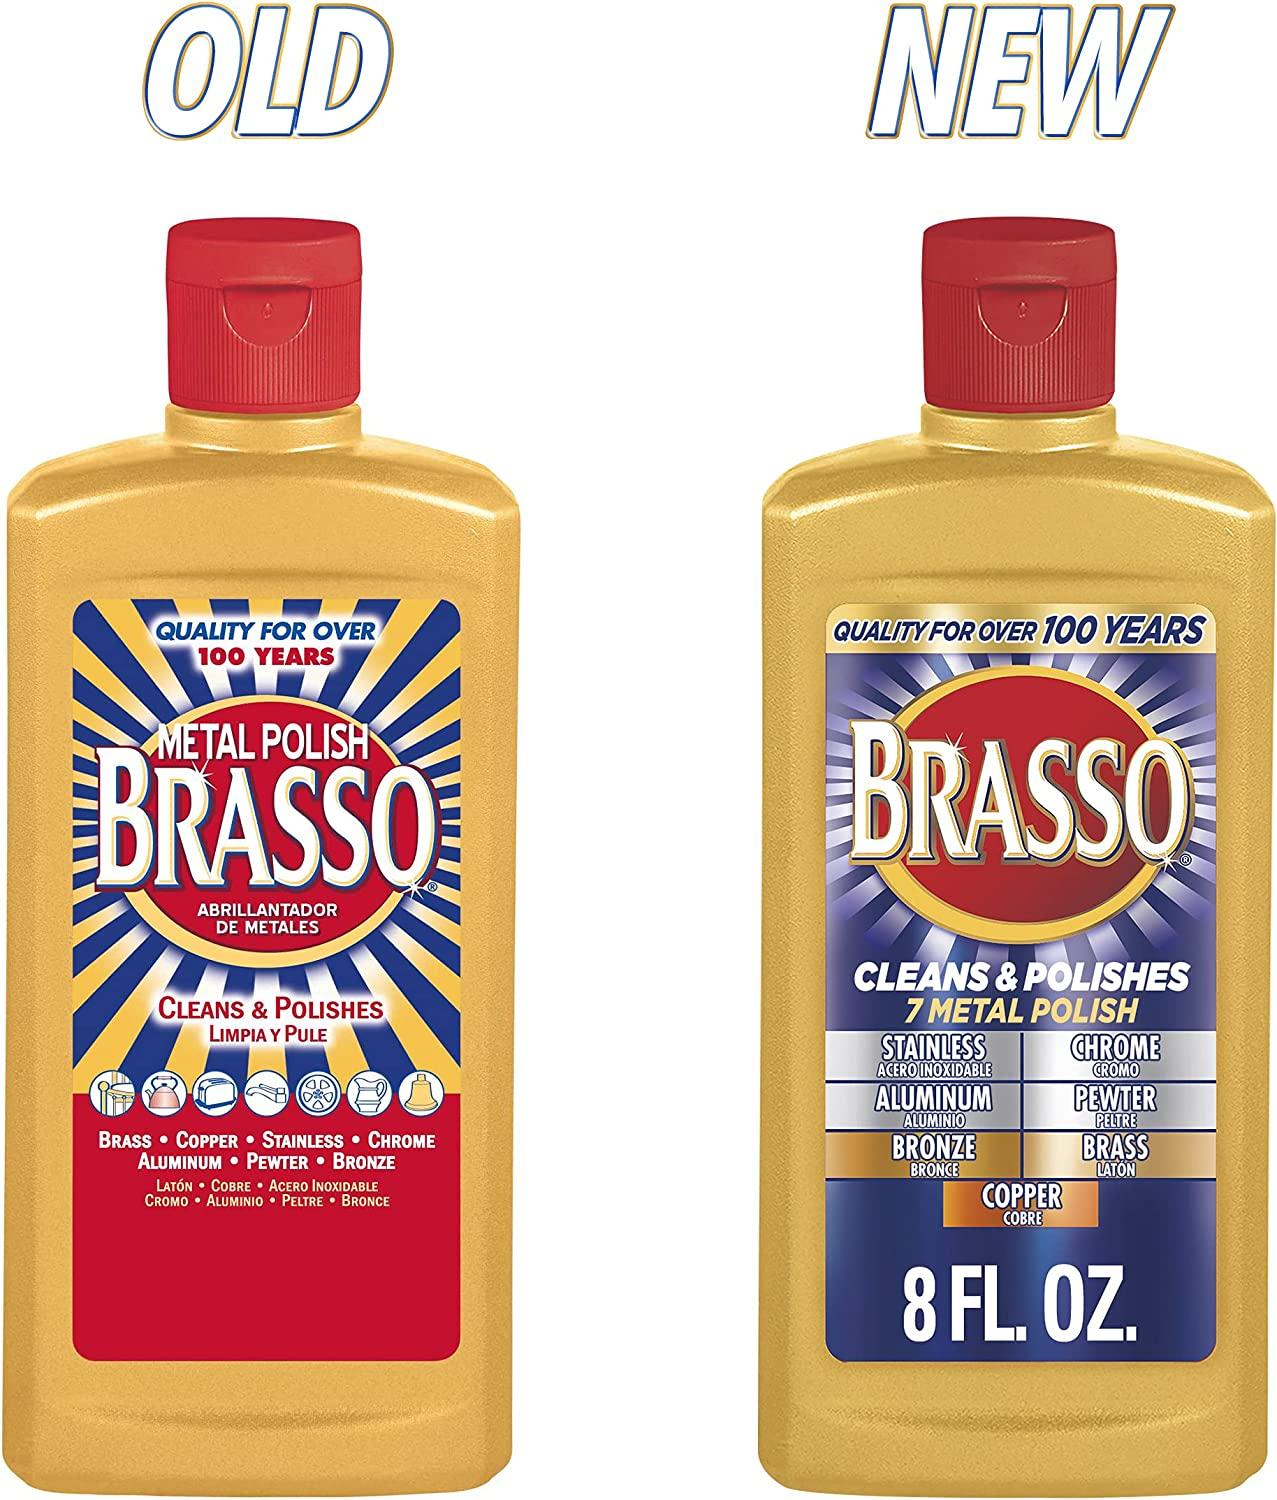 How To Use Brasso  How To Polish Brass With Brasso Polish 